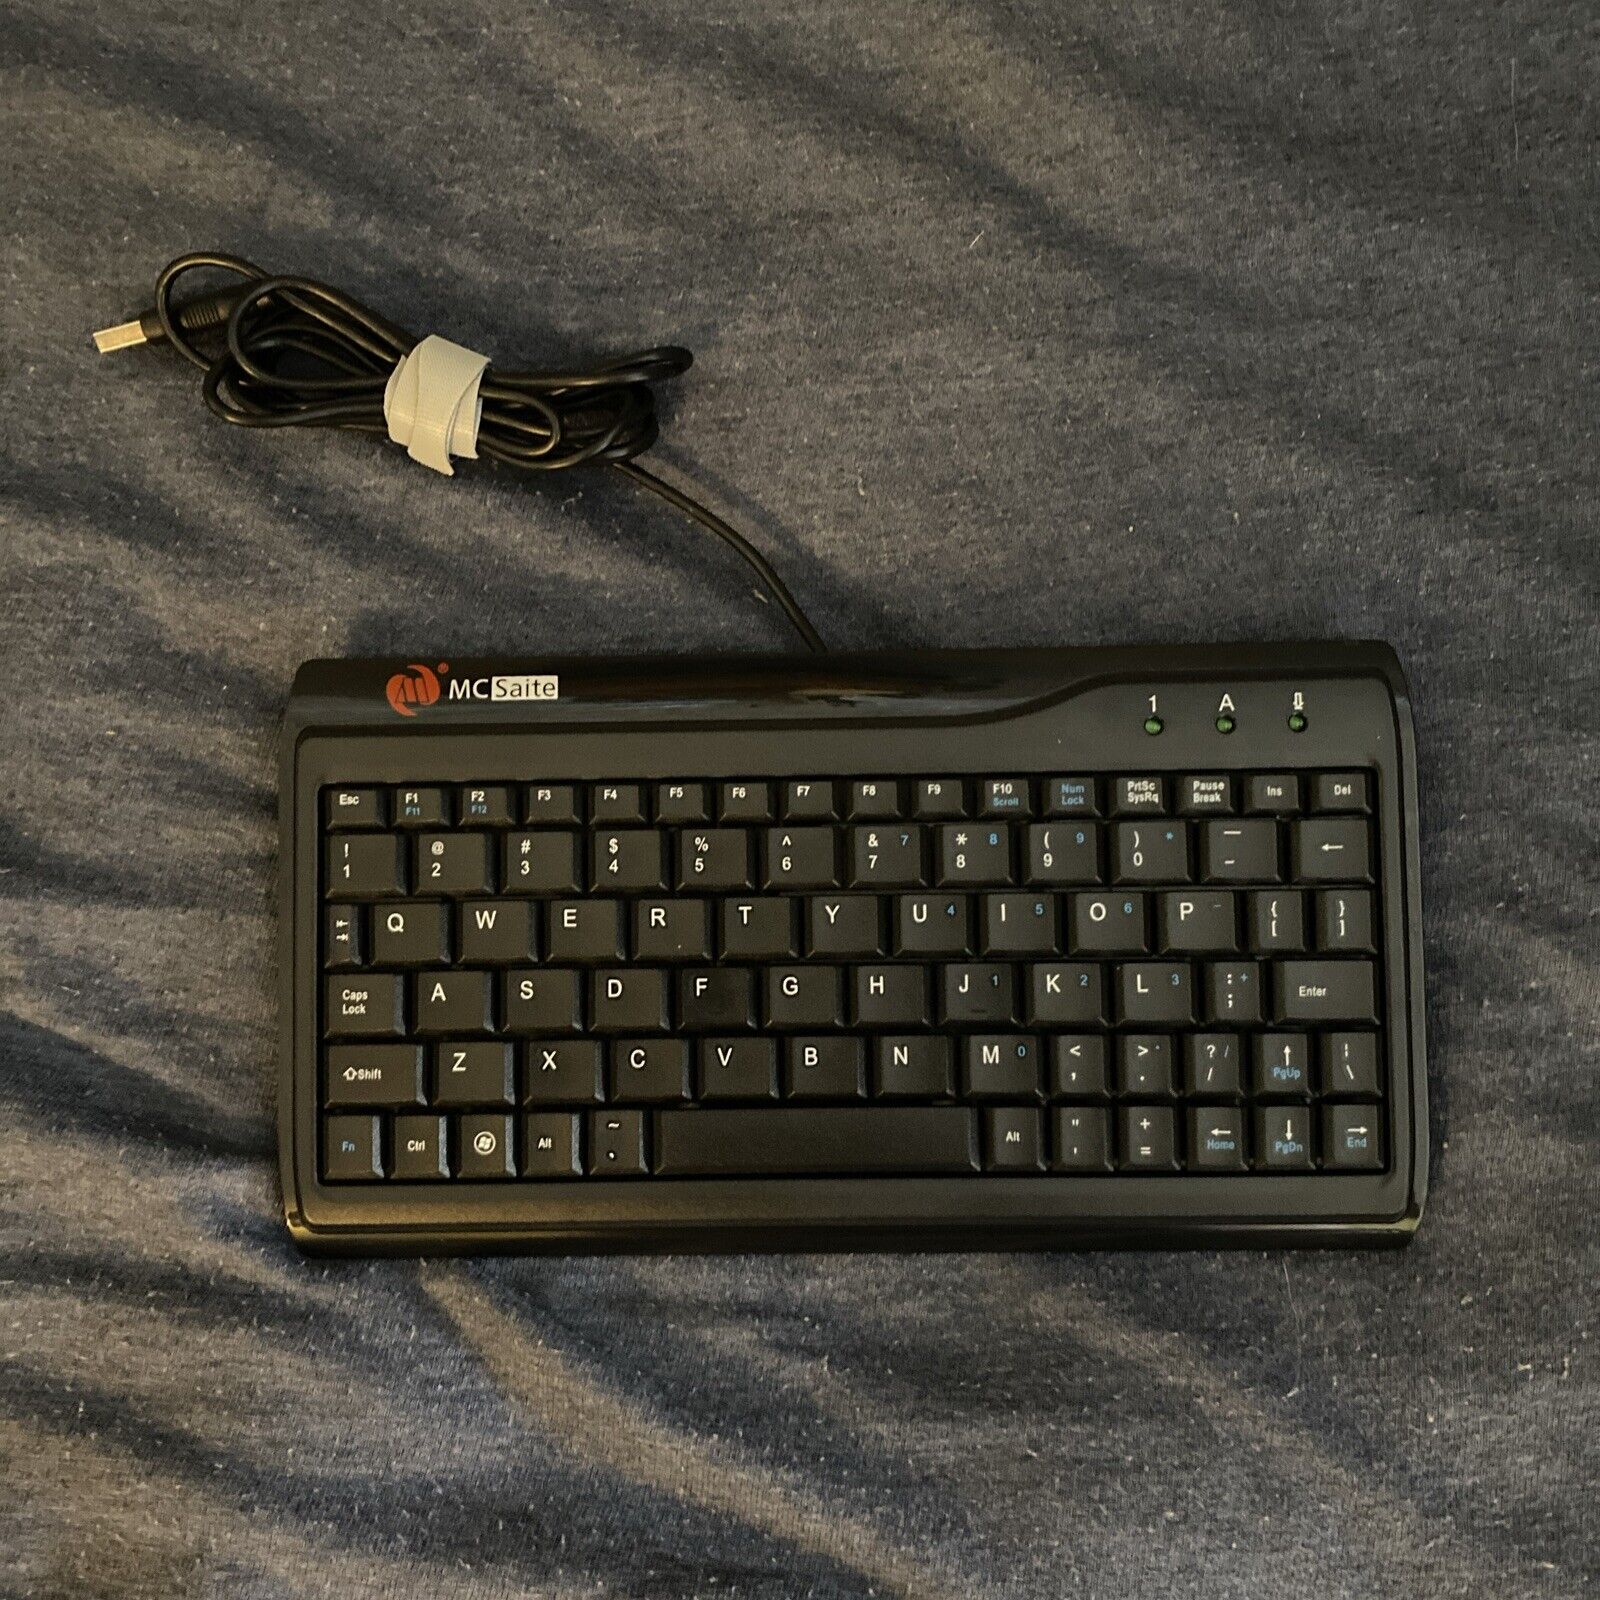 Super Mini Wired Keyboard Mcsaite Full Size 78 Keys Keypad Small Portable Fit